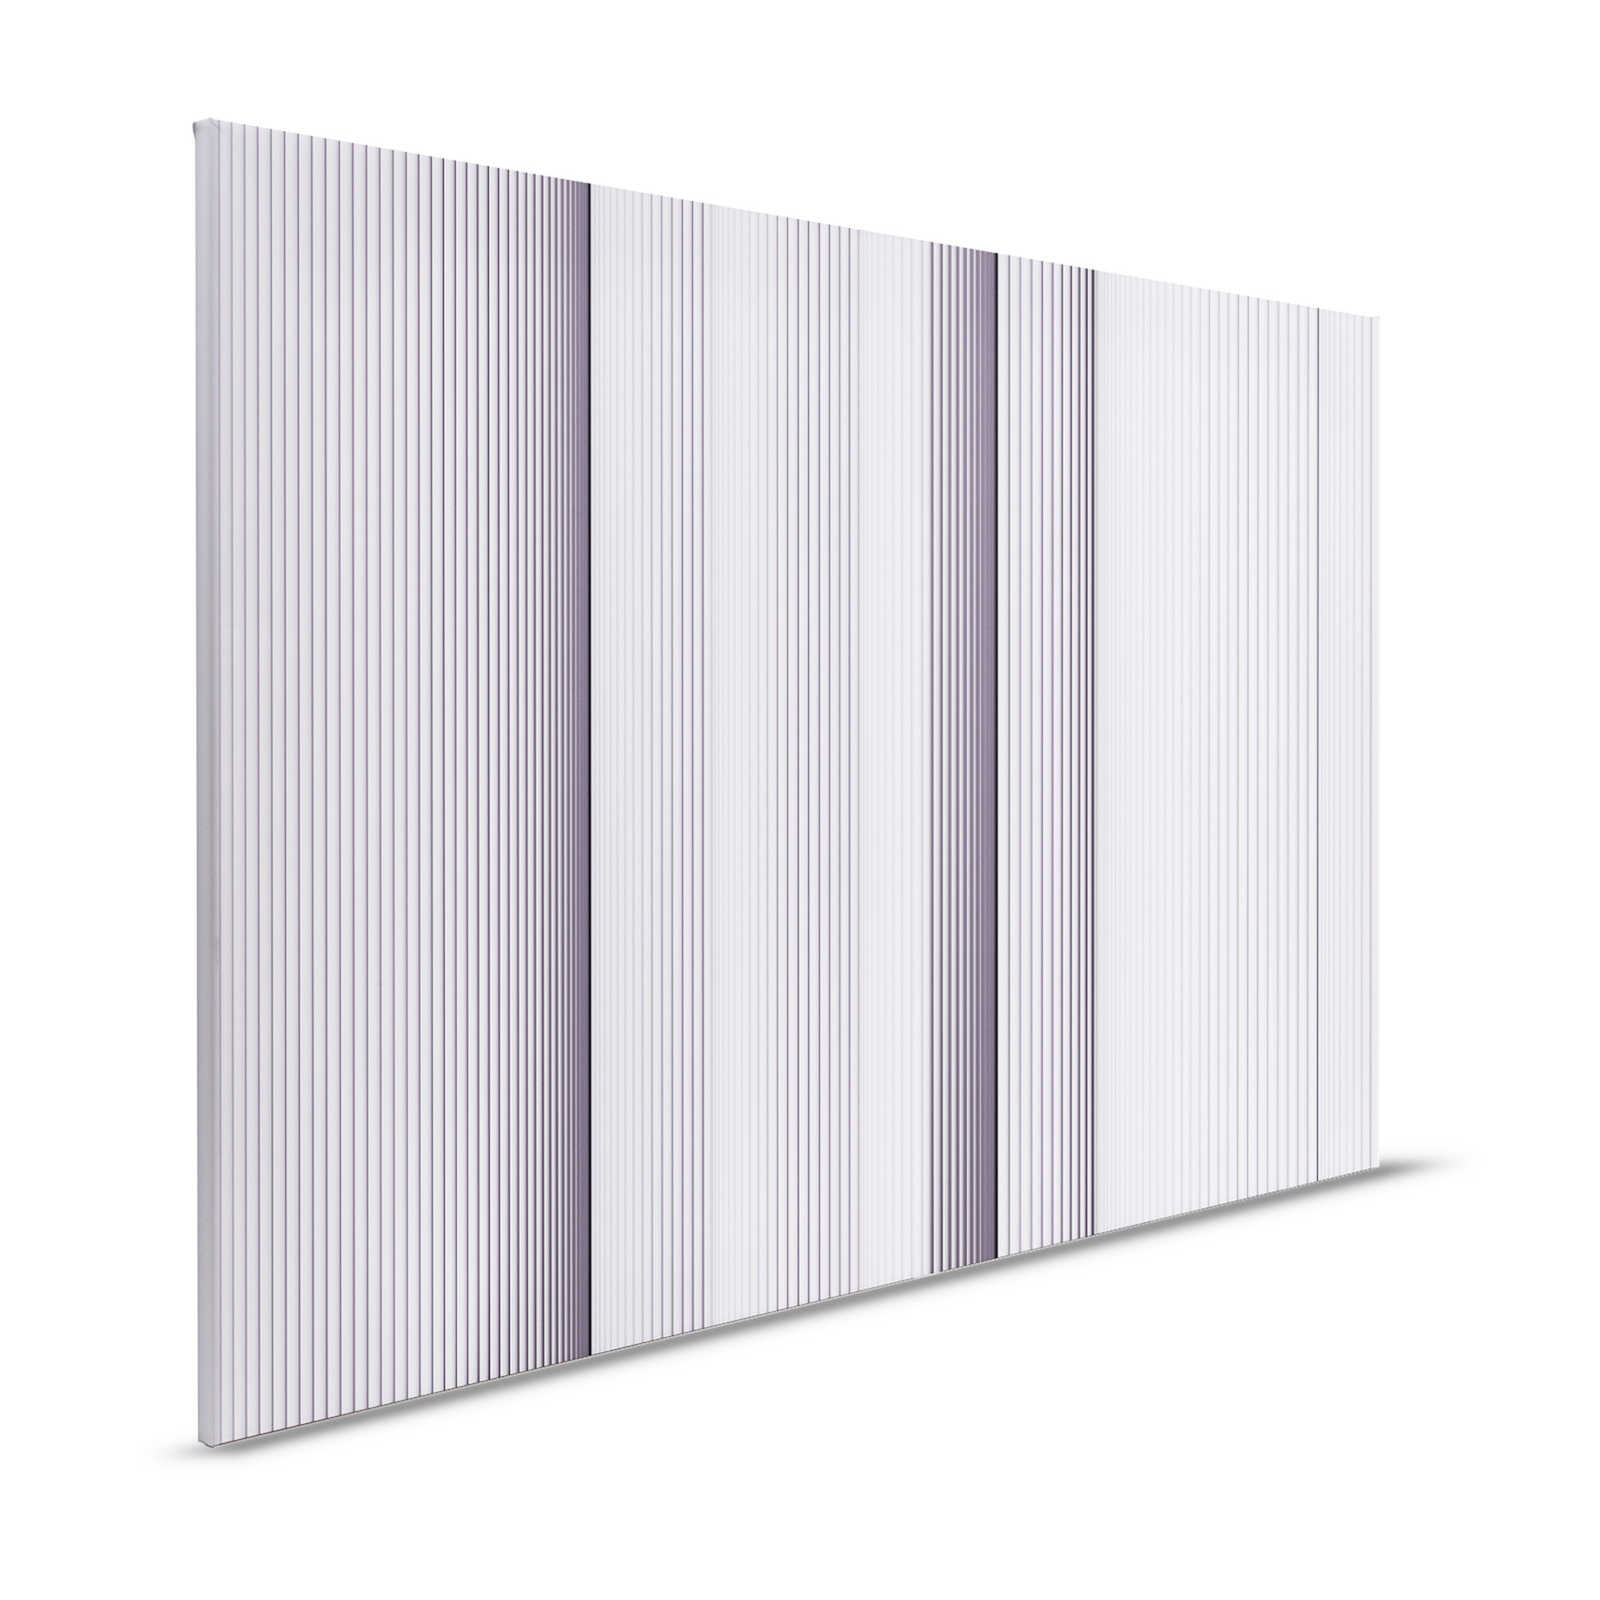 Magic Wall 1 - Stripe Canvas Schilderij 3D Illusie Effect, Paars & Wit - 1.20 m x 0.80 m
